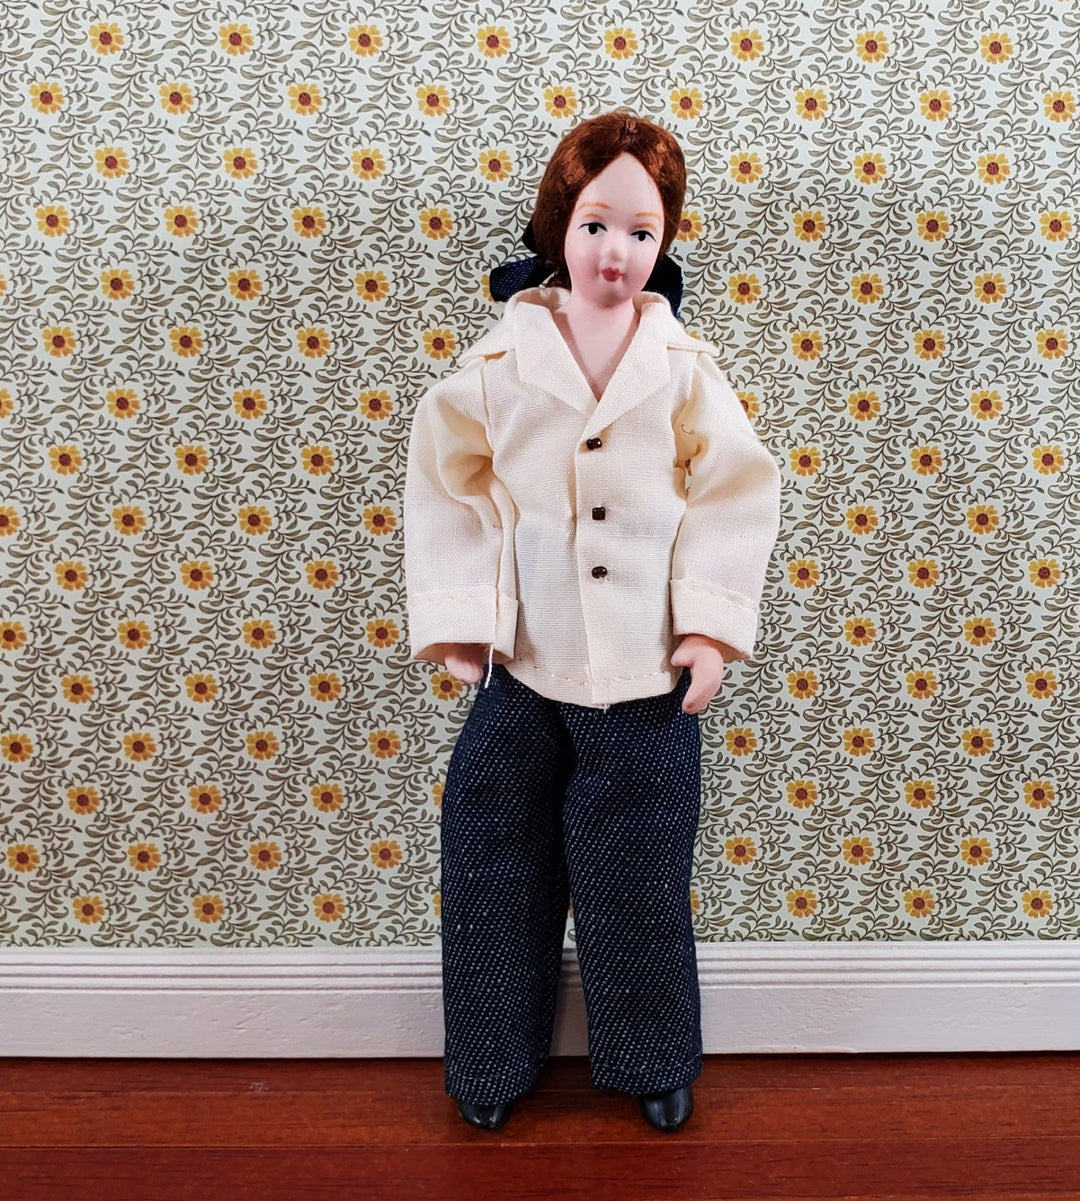 Dollhouse Modern Woman Doll Mom Porcelain Poseable 1:12 Scale White Jacket Jeans - Miniature Crush